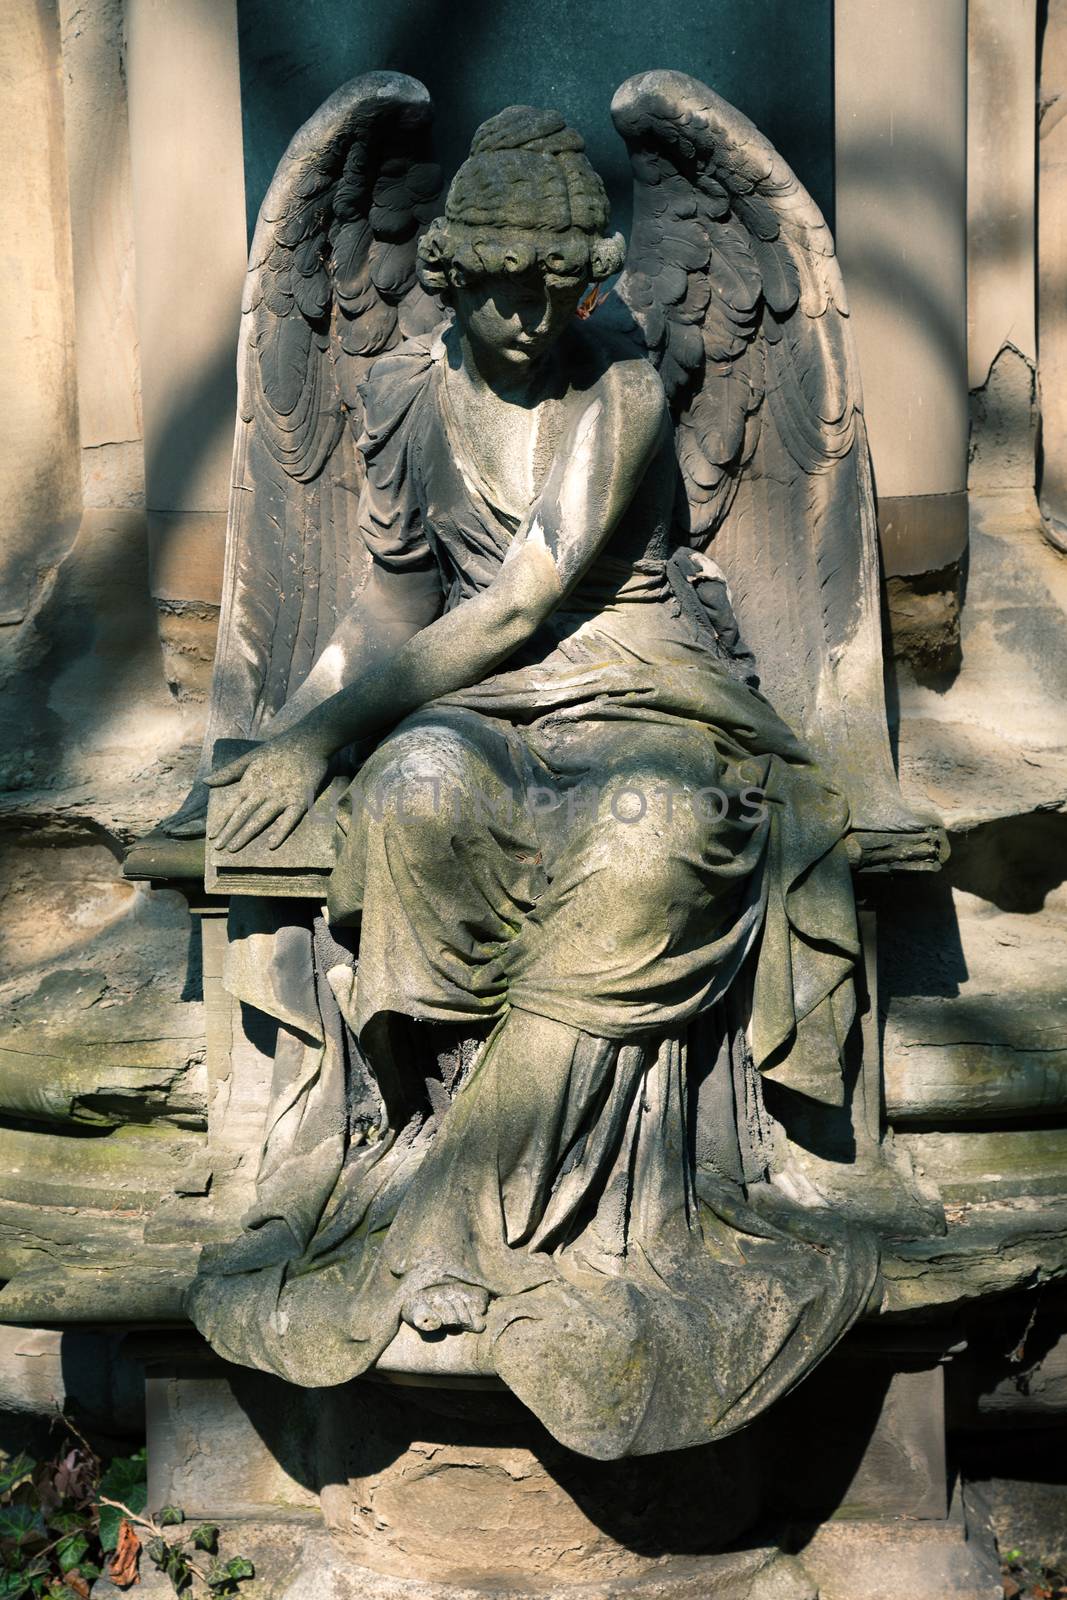 Angel statue on Cemetery in Europe by motorolka